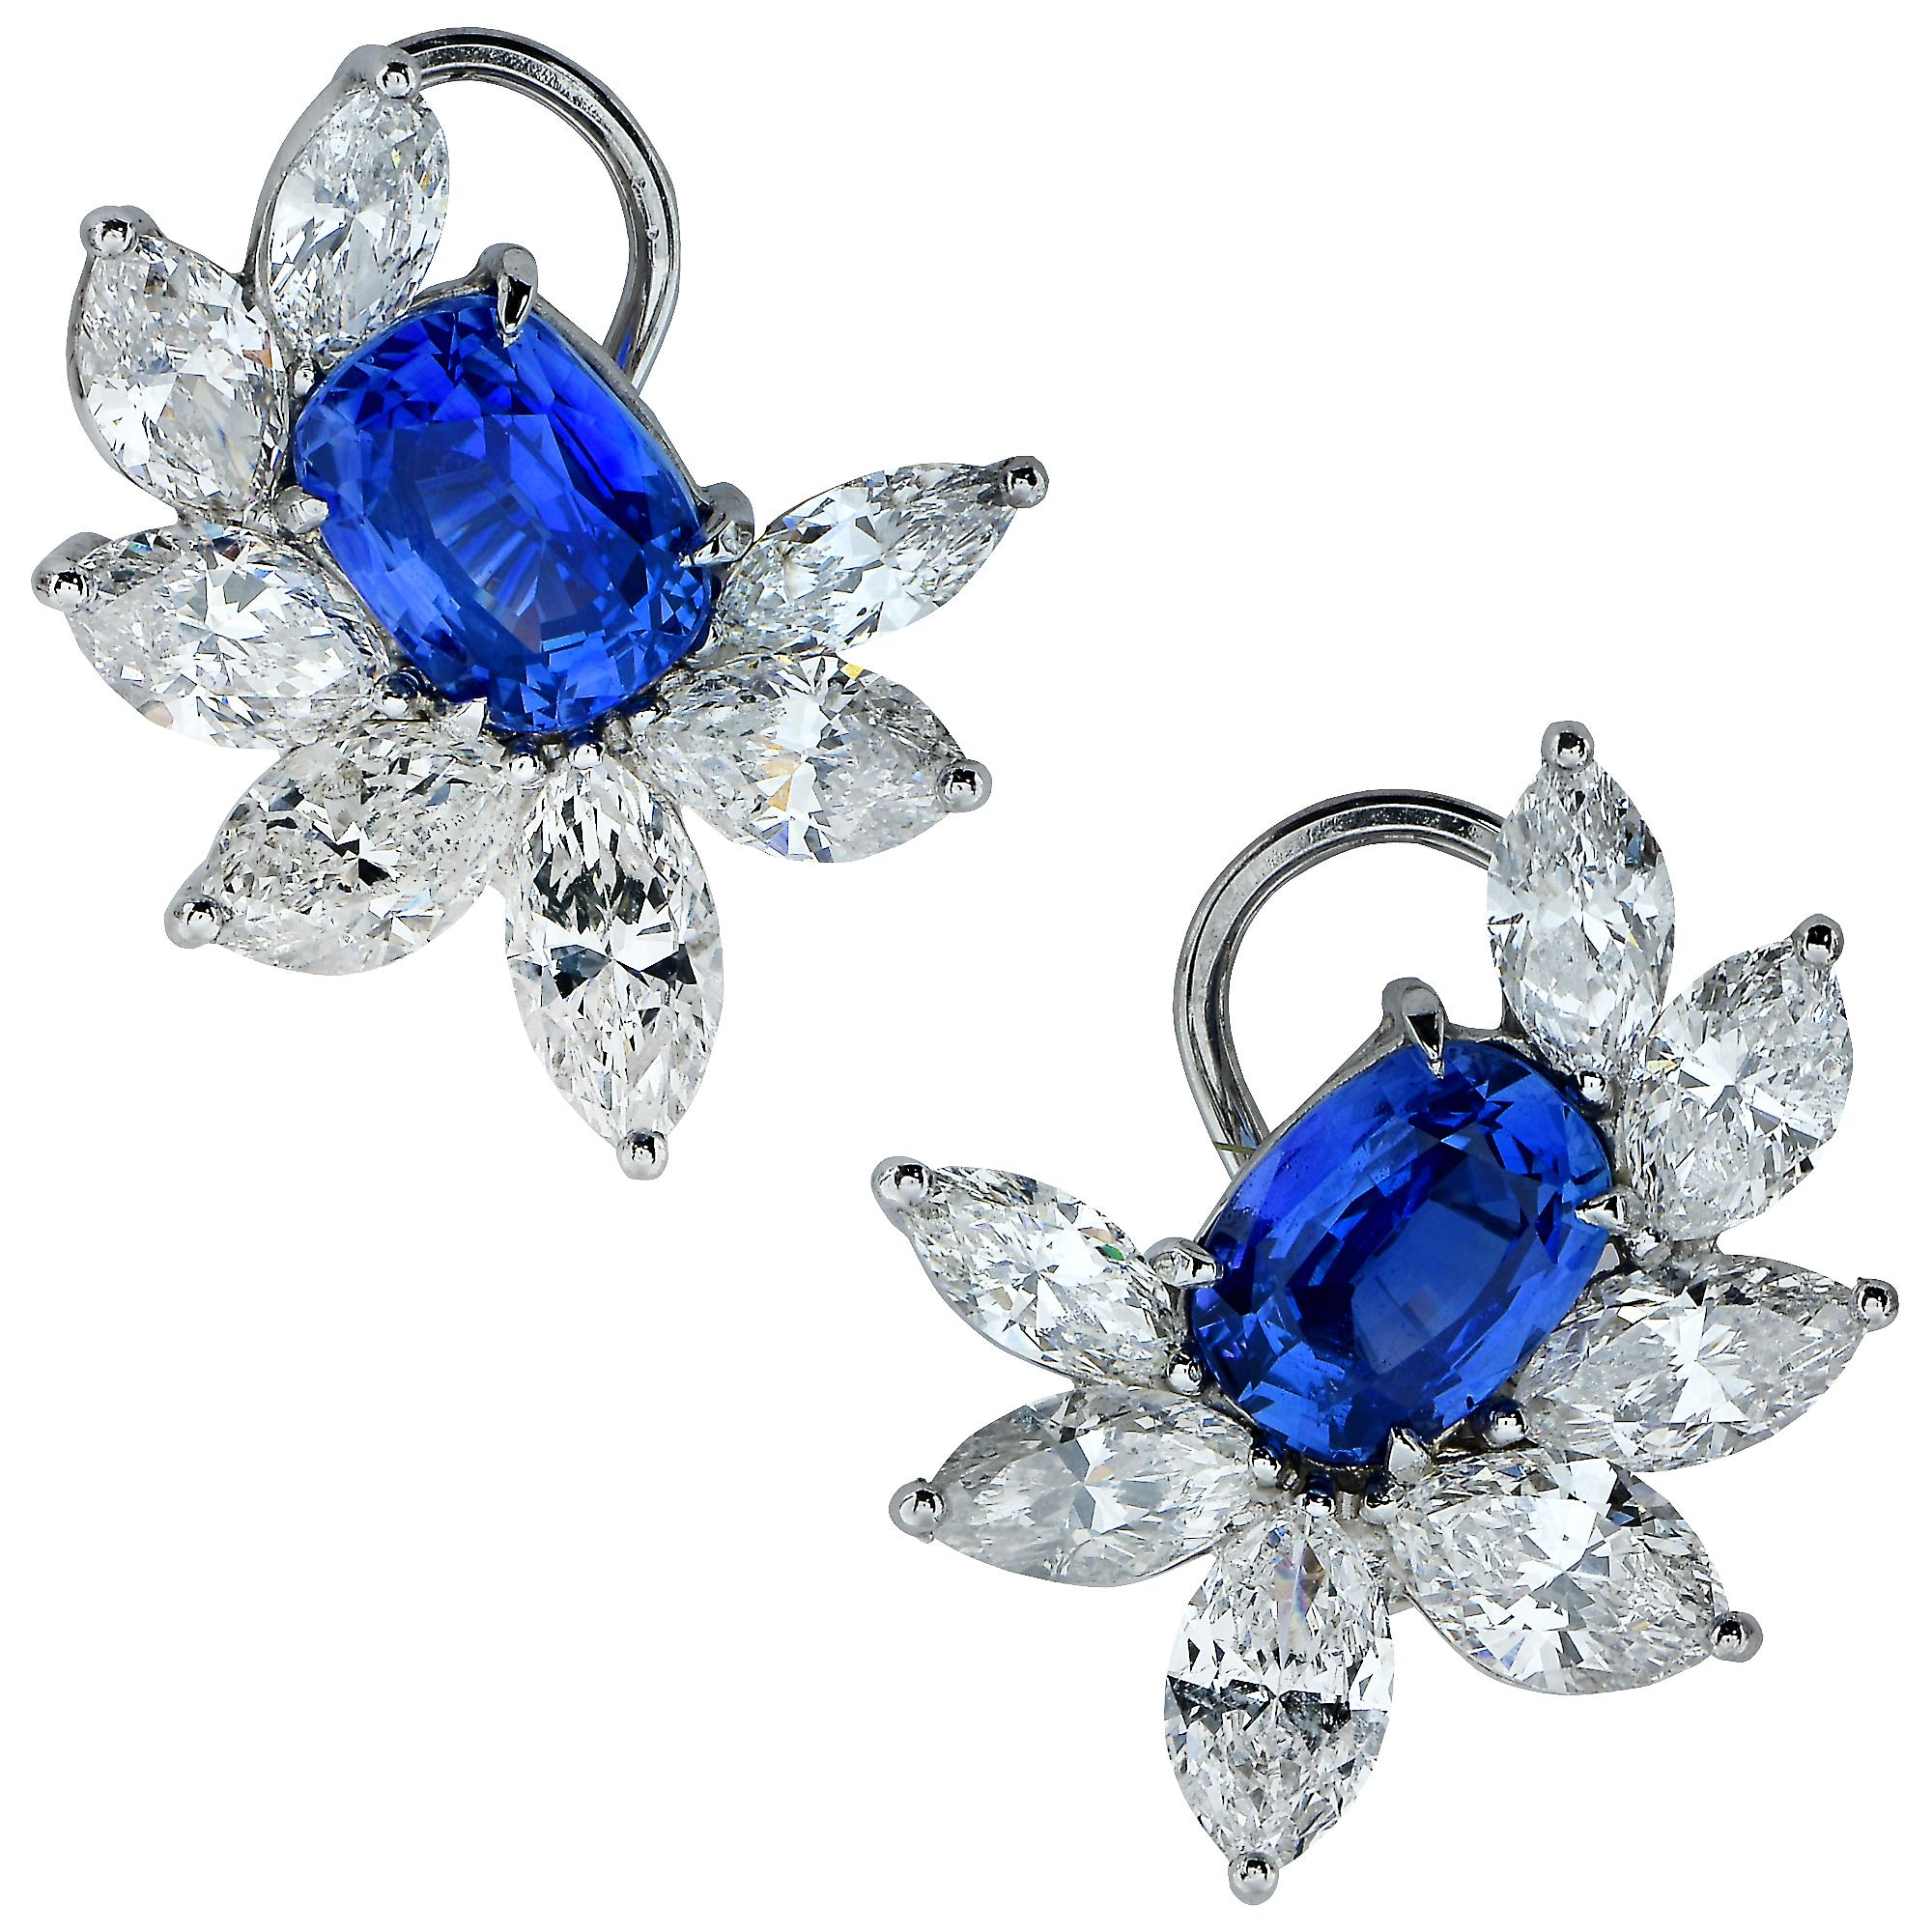 Oval Cut Vivid Diamonds 9.54 Carat Diamond and Sapphire Lever-Back Earrings